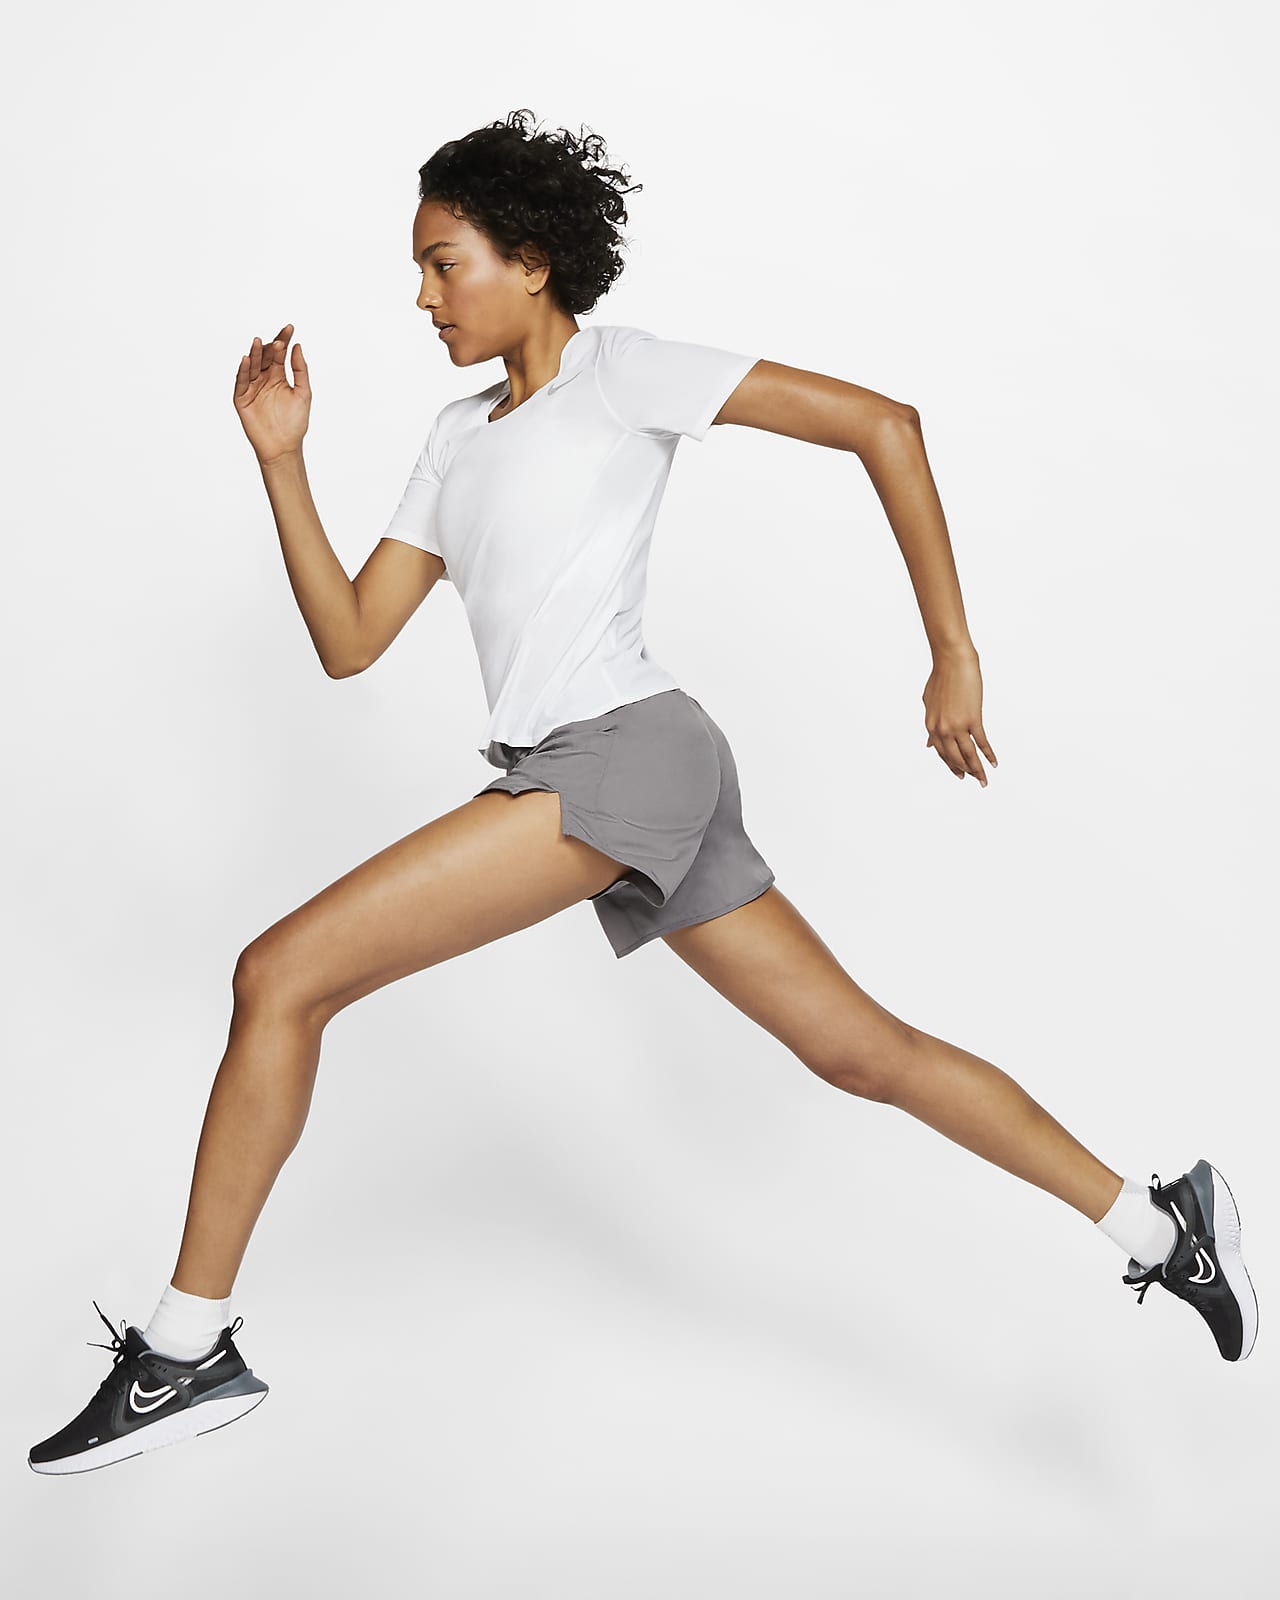 women's running shorts nike tempo luxe